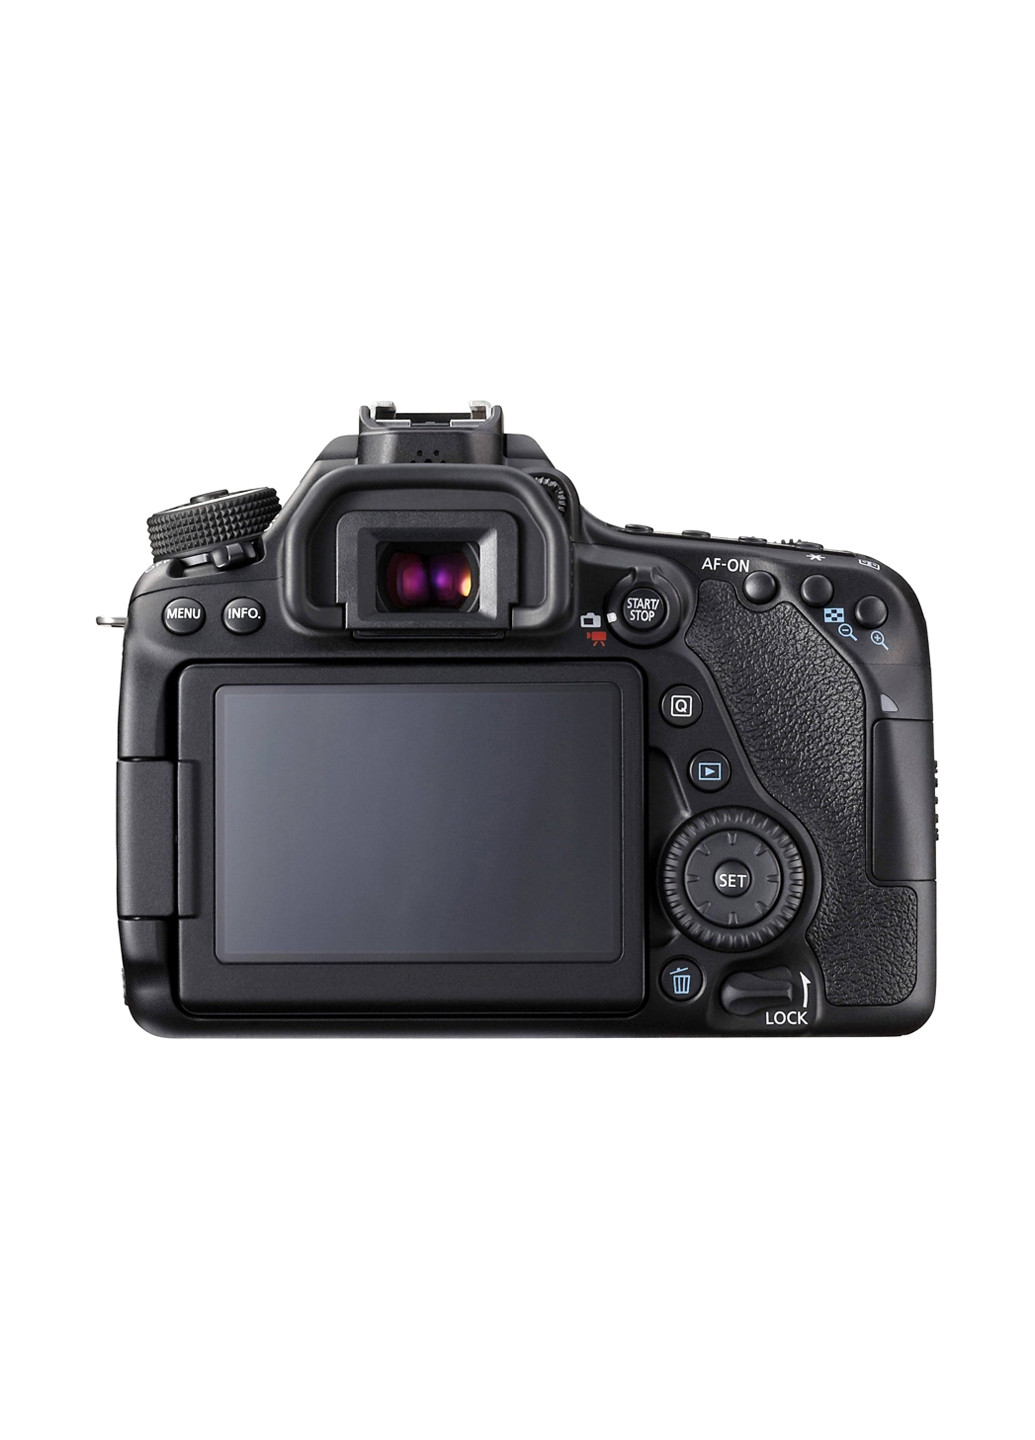 Дзеркальна фотокамера EOS 80D + об'єктив 18-135 IS nano USM Canon eos 80d + объектив 18-135 is nano usm (130470414)